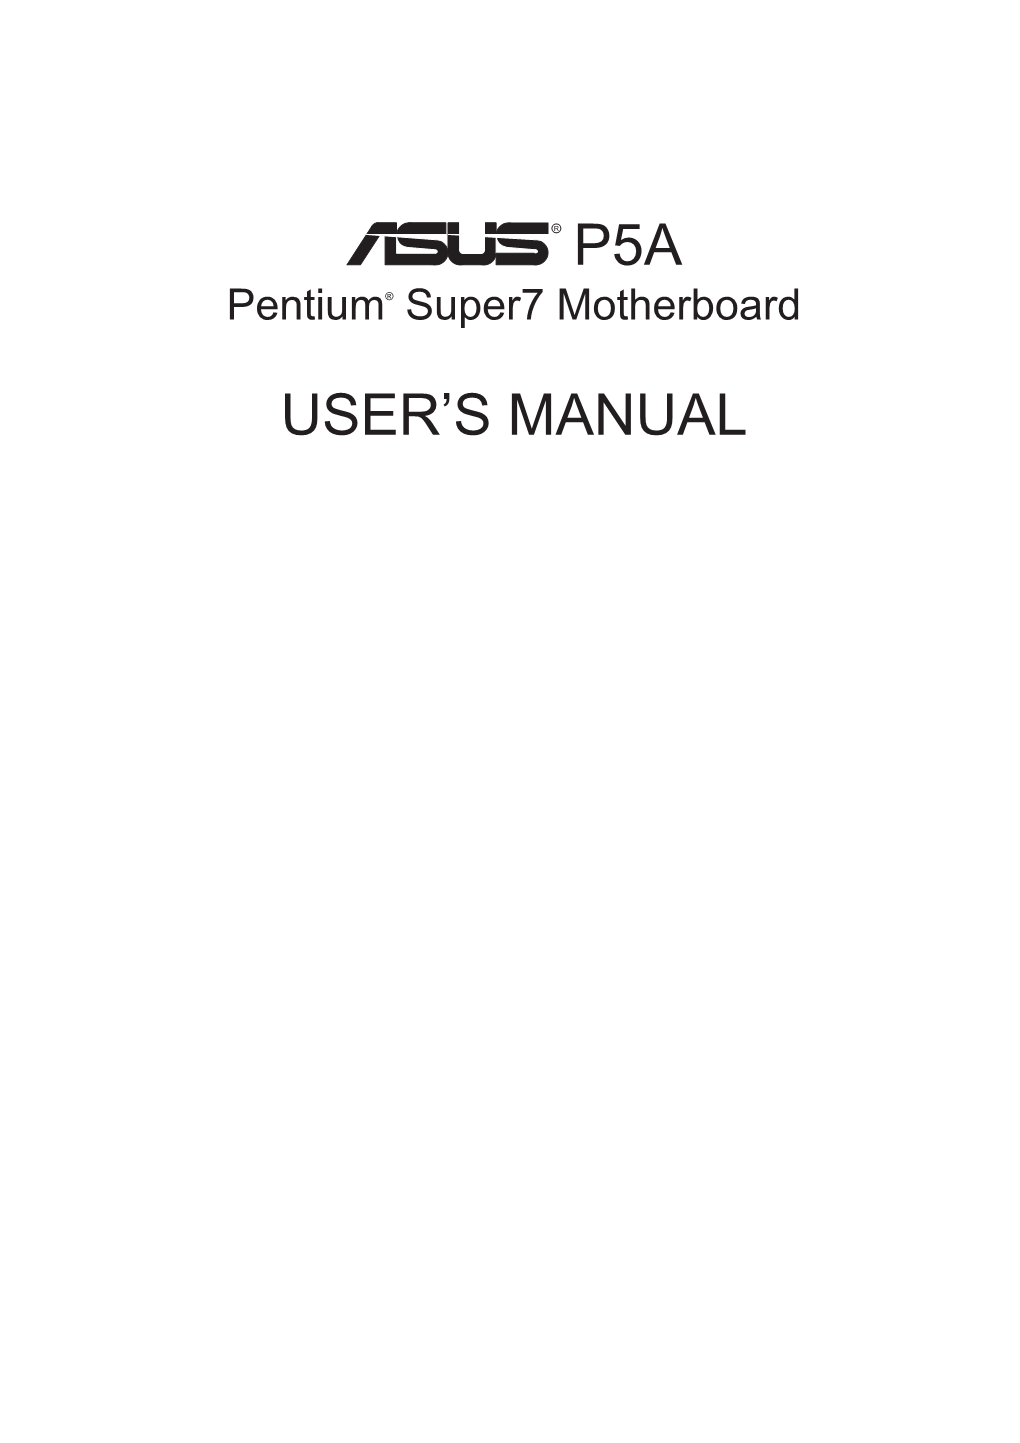 P5a User's Manual